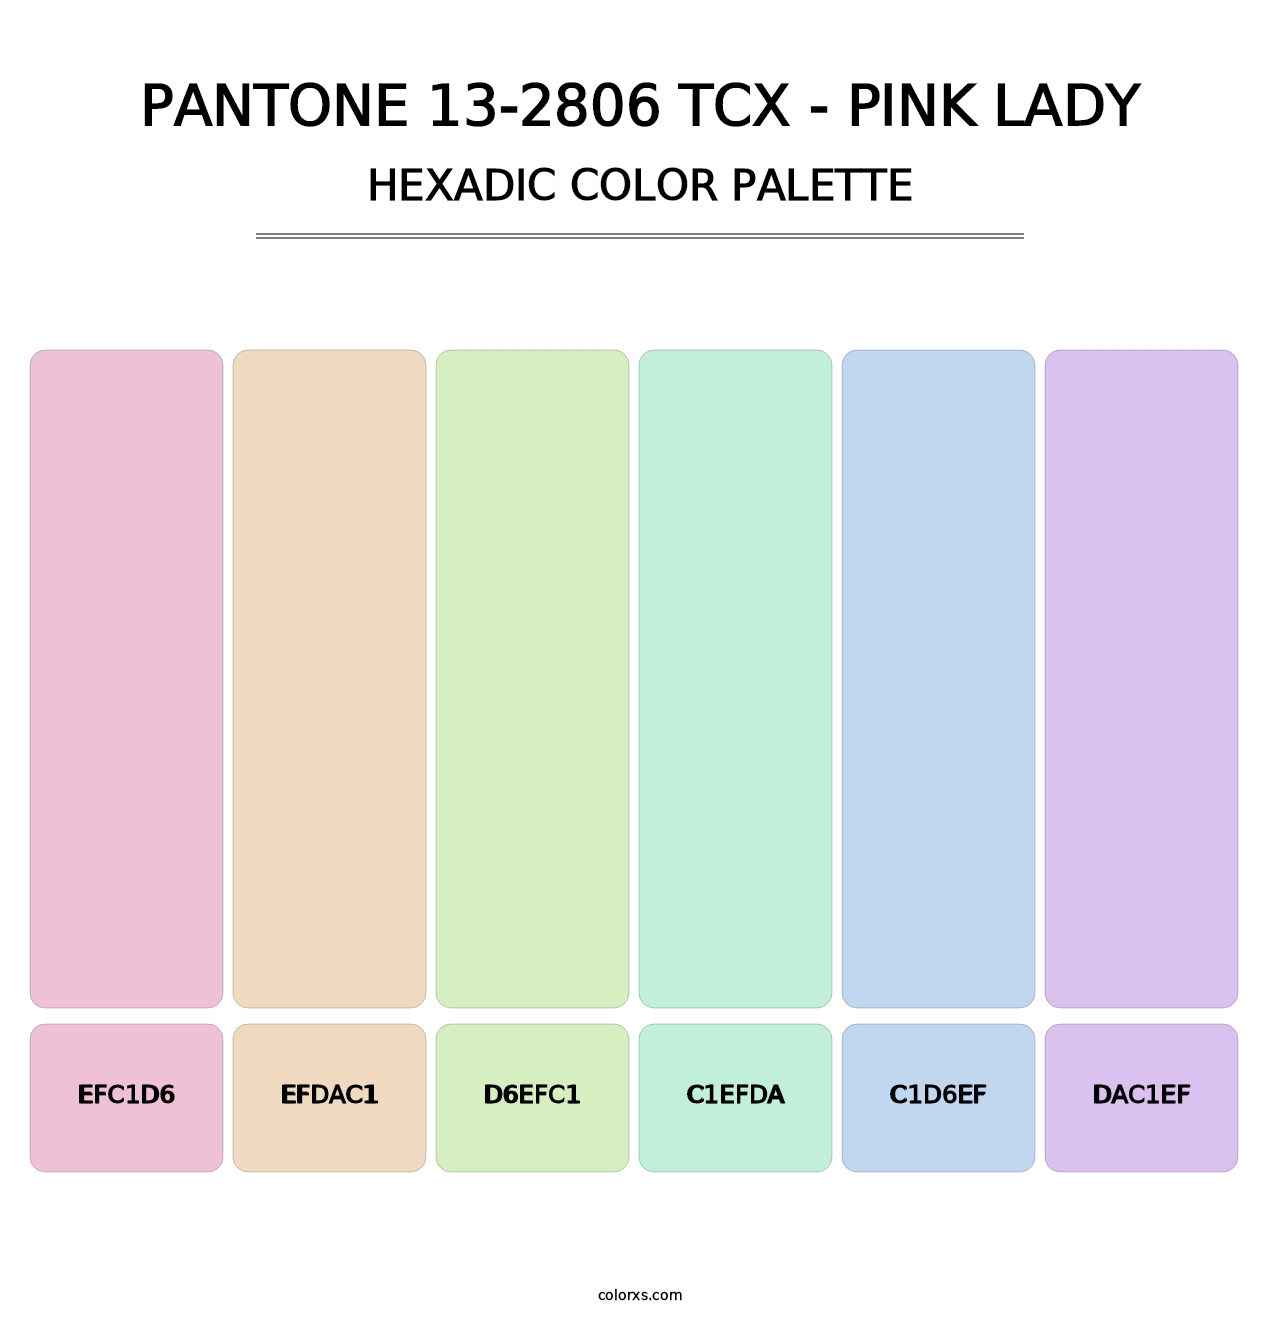 PANTONE 13-2806 TCX - Pink Lady - Hexadic Color Palette